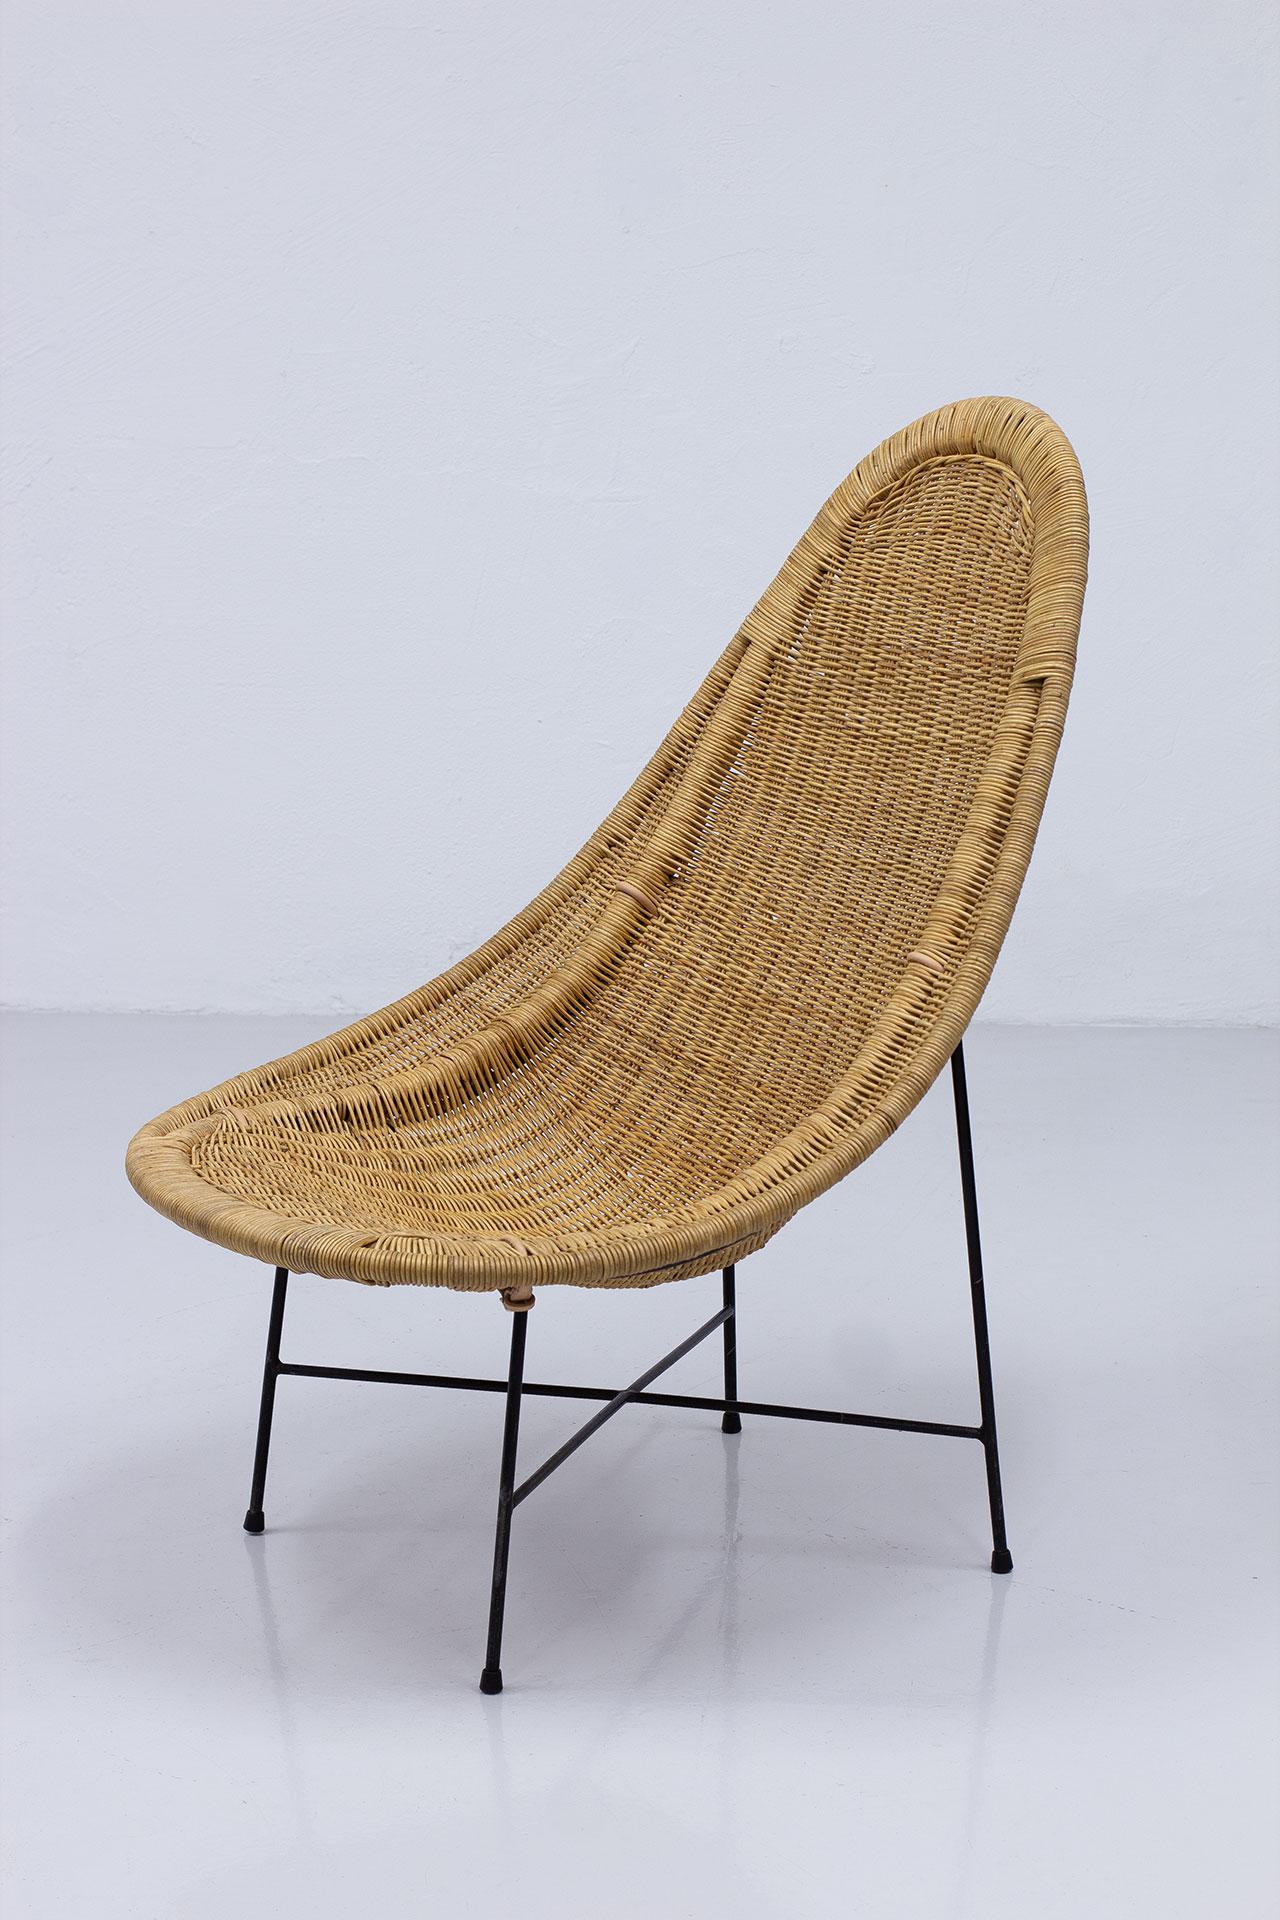 Steel 'Stora Kraal' Lounge Chair in Woven Cane by Kerstin Hörlin Holmquist, Sweden For Sale